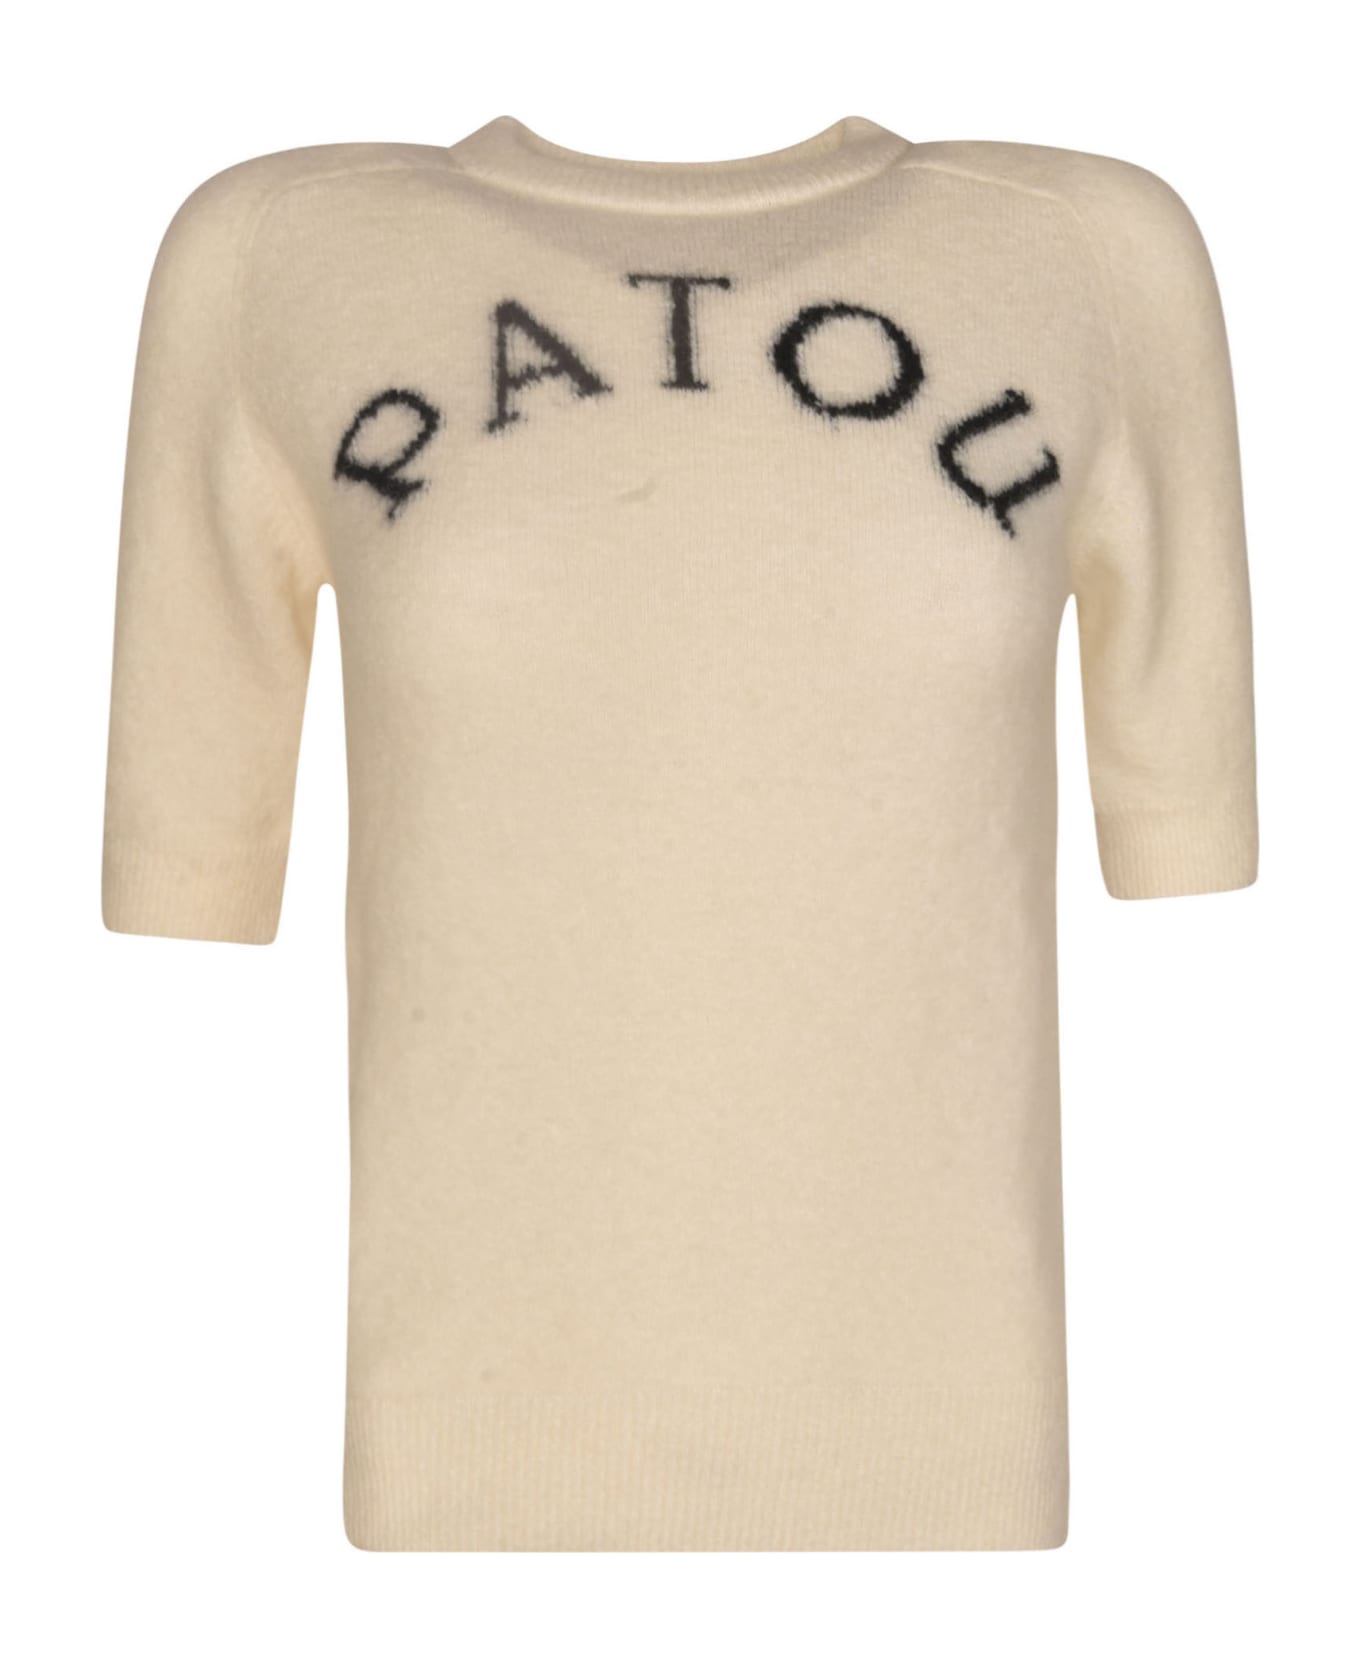 Patou Logo Sweater - Avalanche ニットウェア